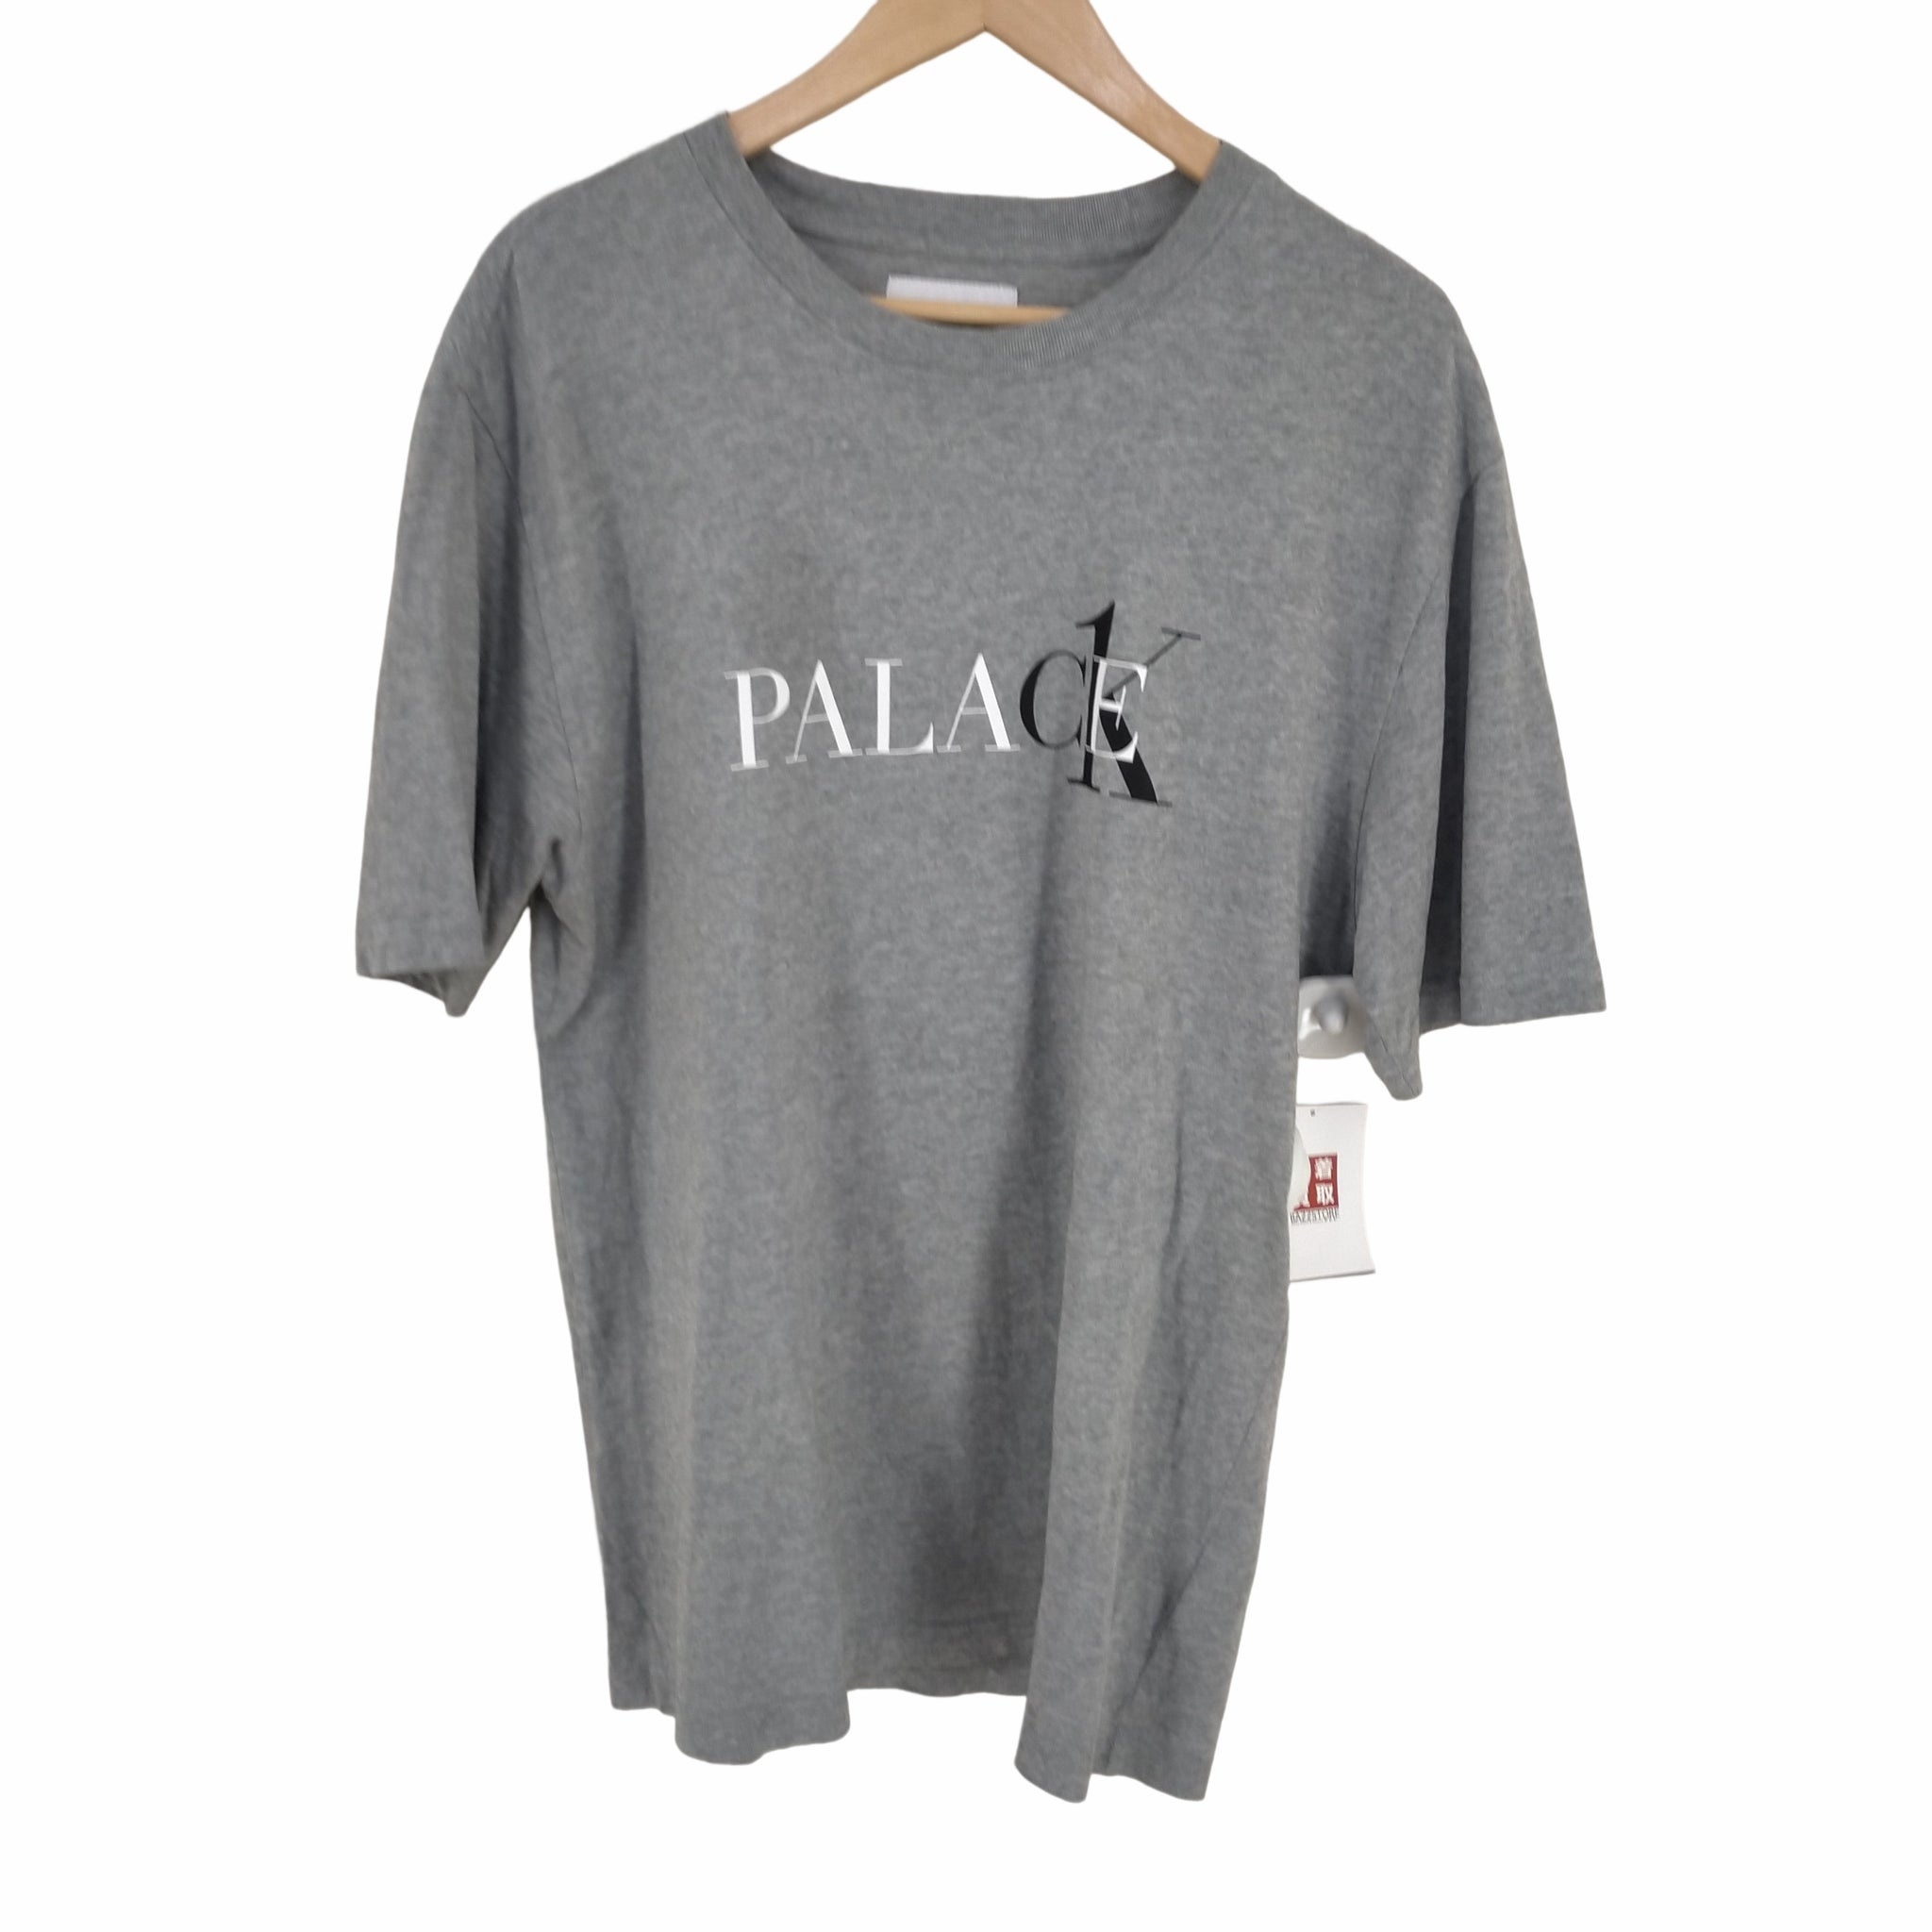 CK1 Palace Crew Neck Tee パレス XL Tシャツ - トップス